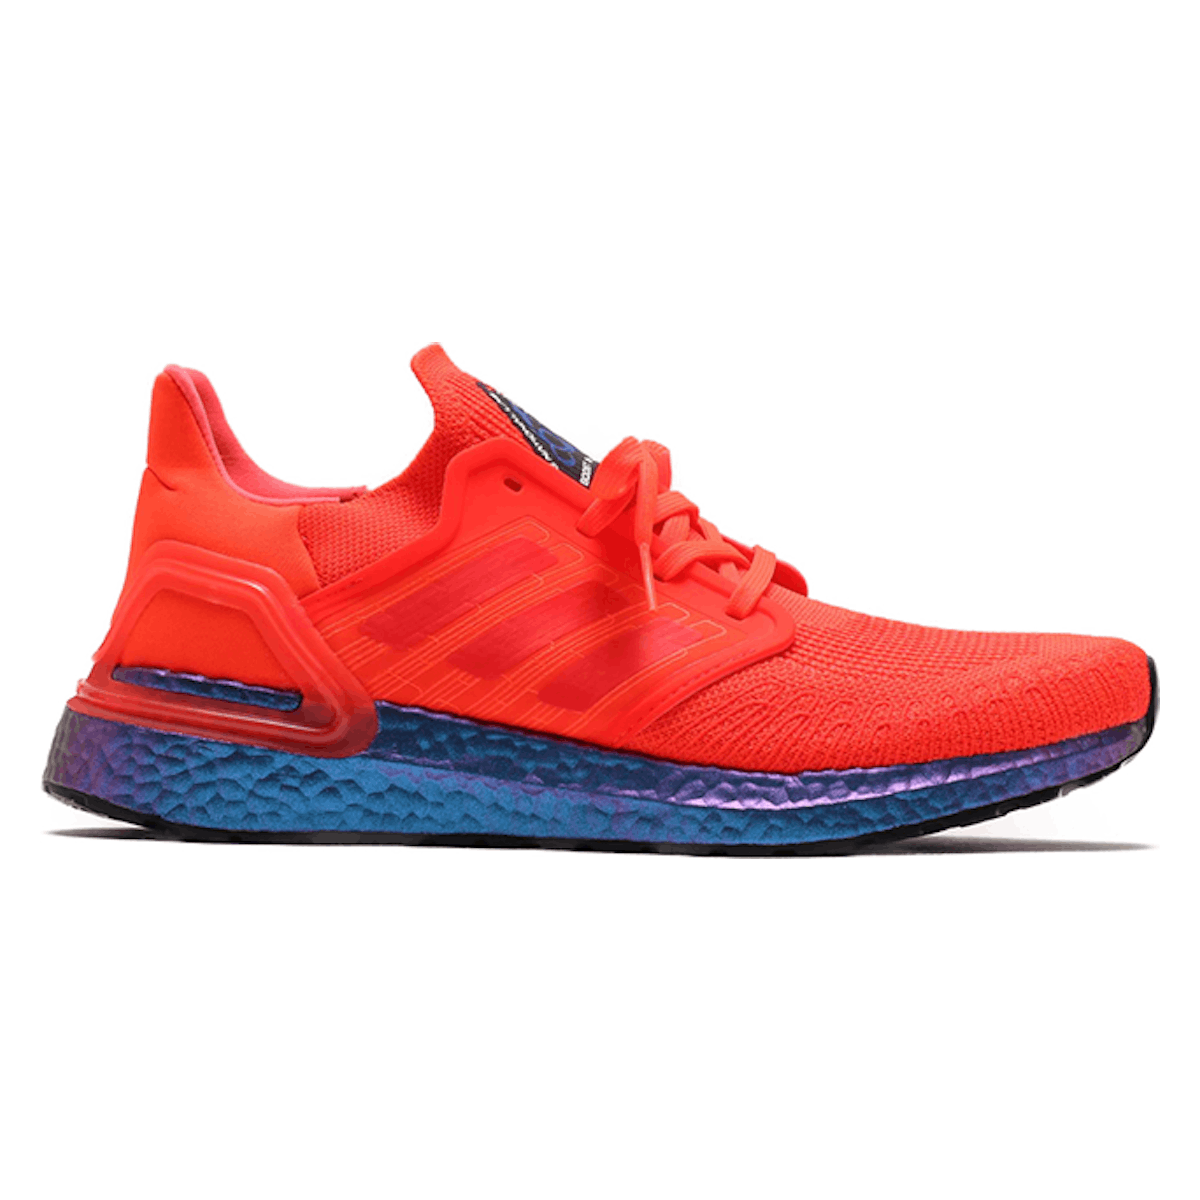 Adidas UltraBoost 2020 "Solar Red"